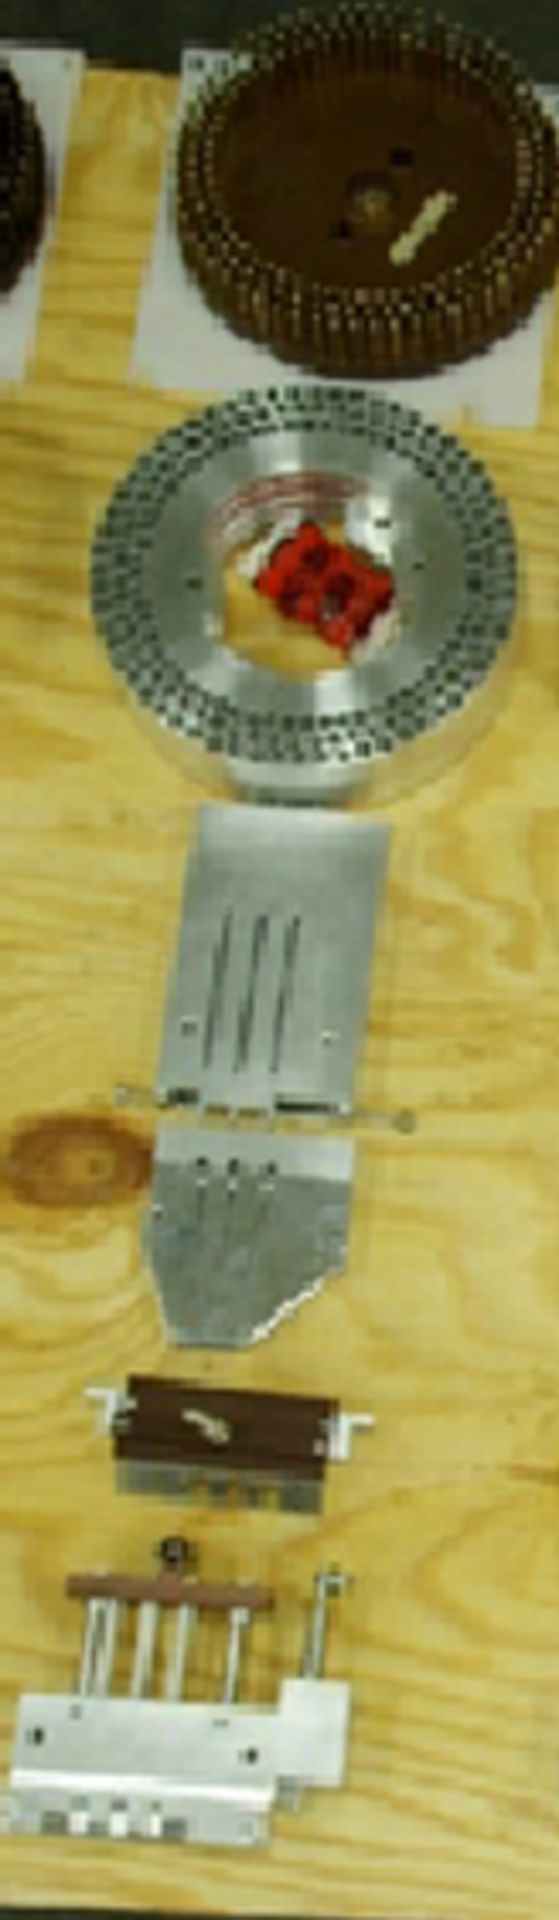 Capsule Filler Semi Auto Tooling Set Model 10 #AA (LOCATED IN ARIZONA) ***CPPS***